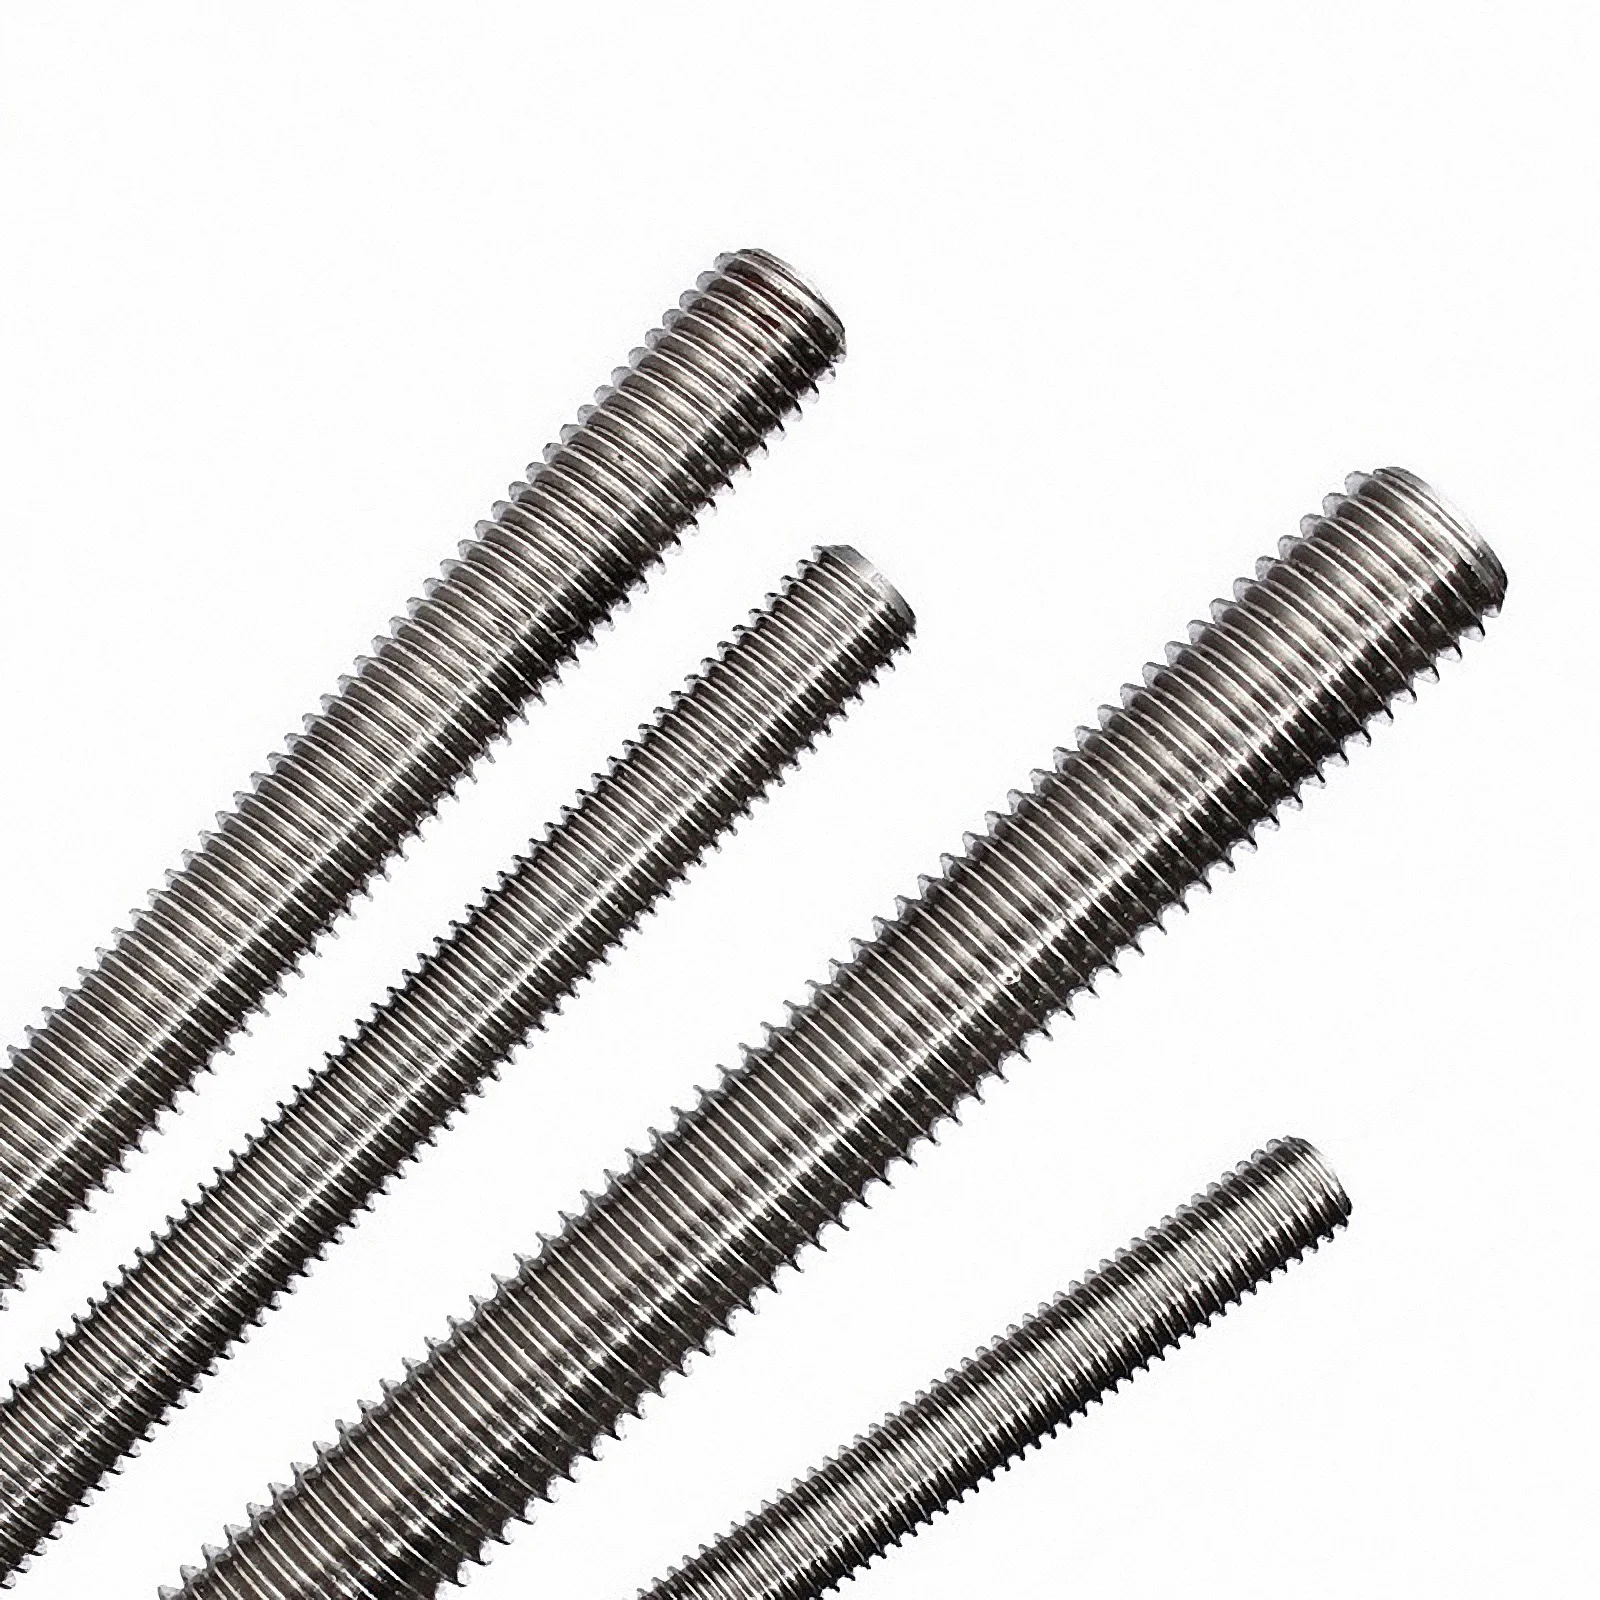 

1PCS Fine Threaded Rod Studding Screw Full-Thread Bar 304 Stainless Steel Fasteners M6 M8 M10 M12 M14 M16 M18 M20 Length 250mm